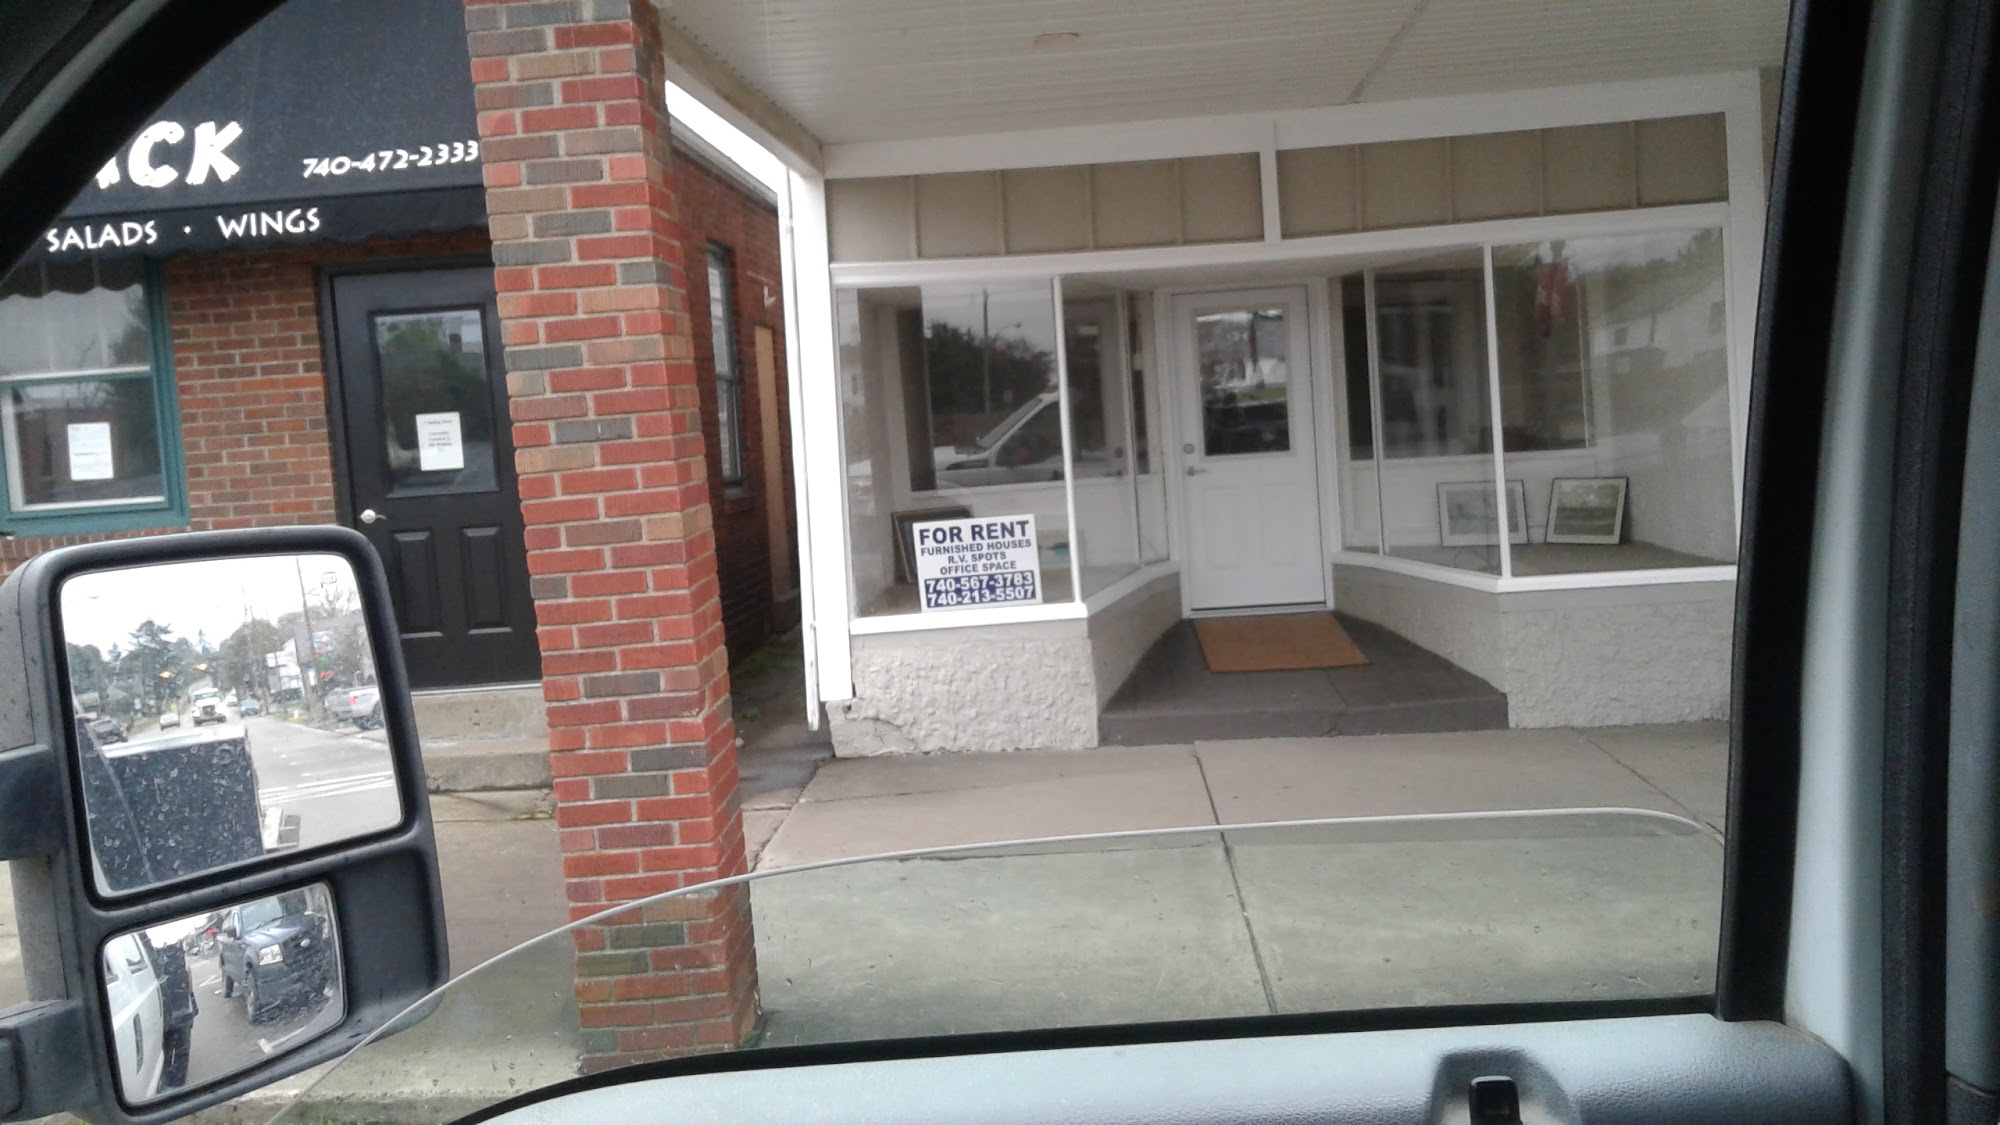 Doug's Barber Shop 237 S Main St, Woodsfield Ohio 43793